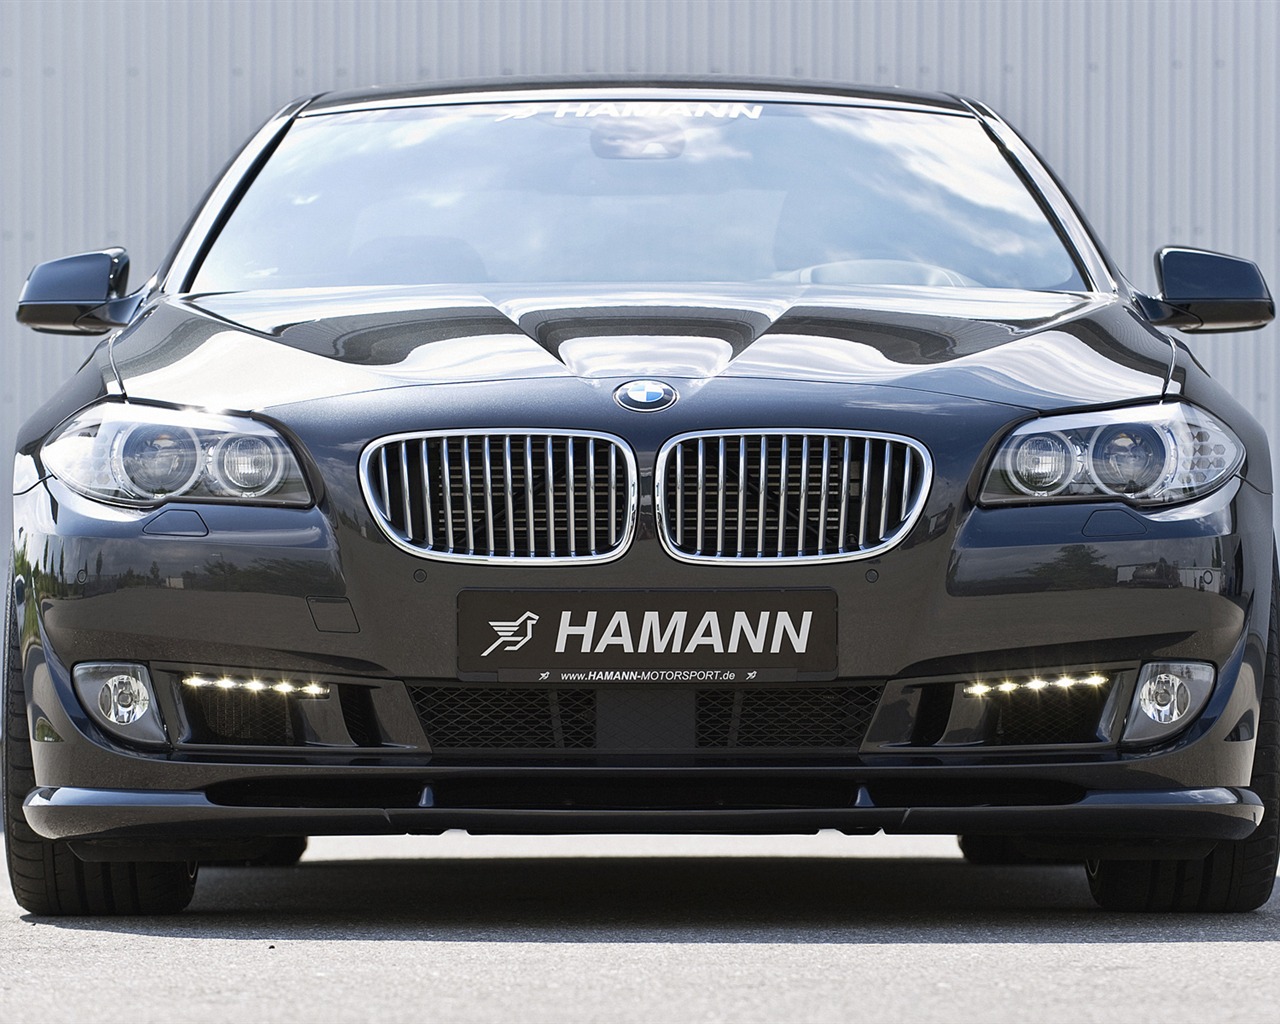 Hamann BMW 5-series F10 - 2010 寶馬 #13 - 1280x1024